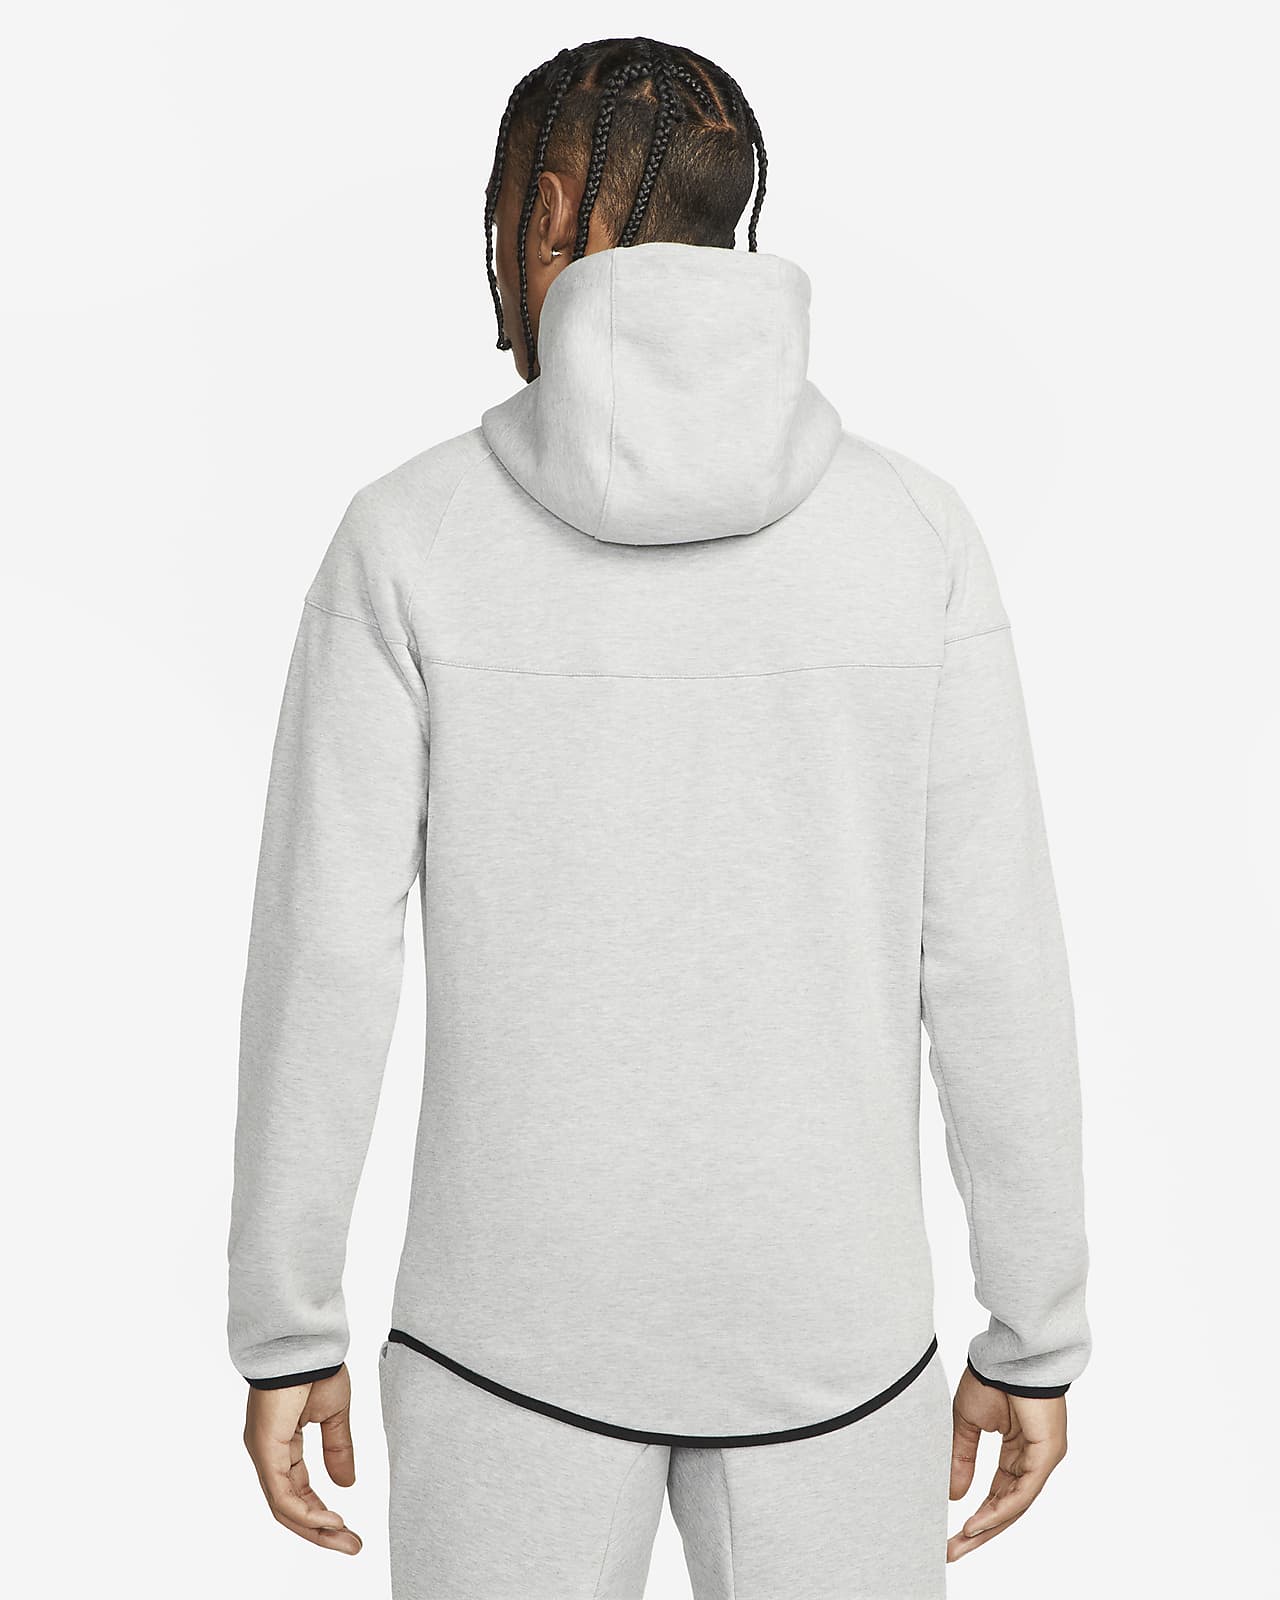 Nike Tech fleece full zip hoodie in red